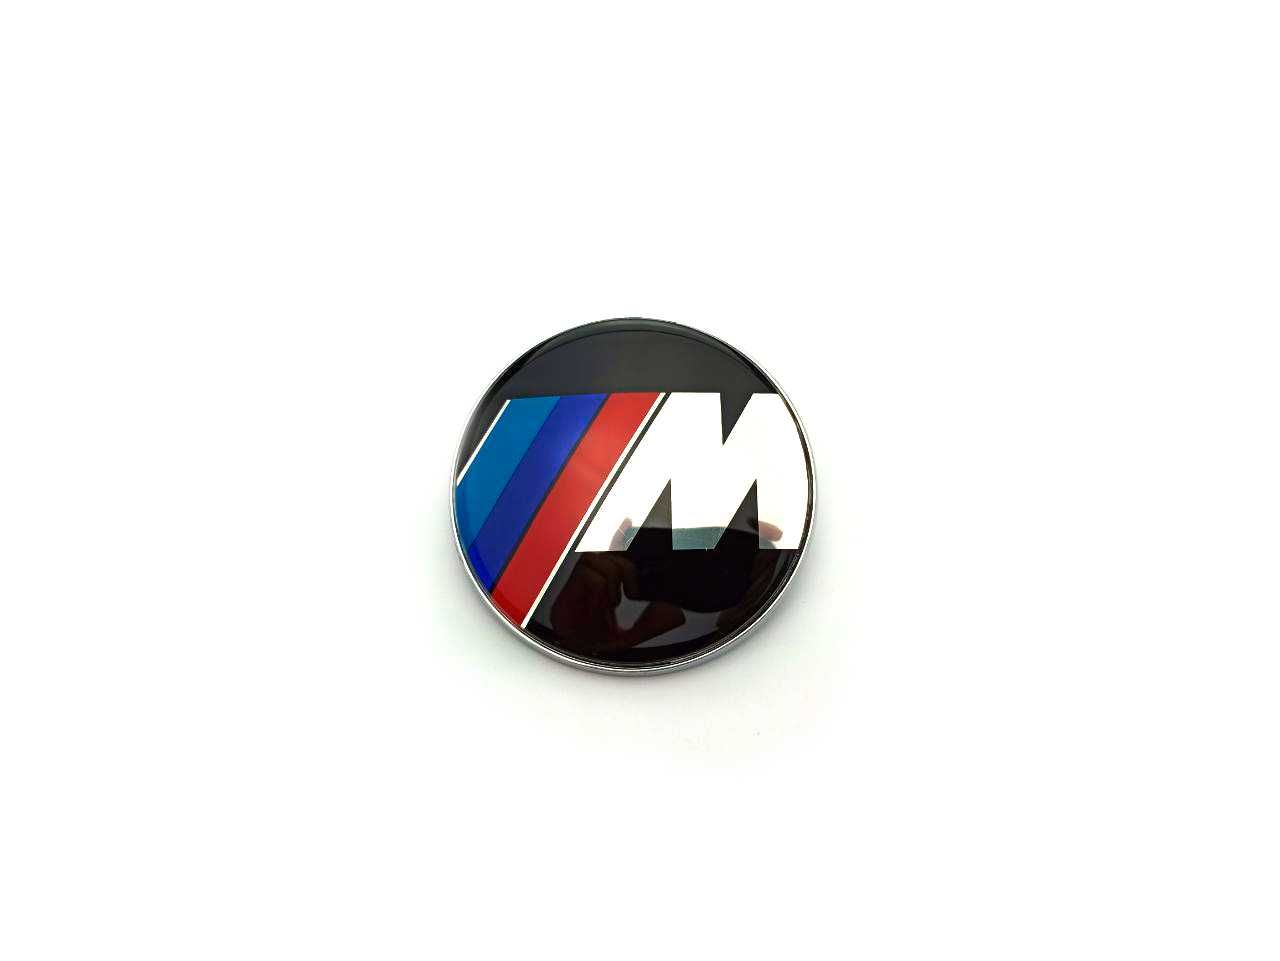 Znaczek emblemat logo BMW M 74mm e39 e36 e46 e90 e60